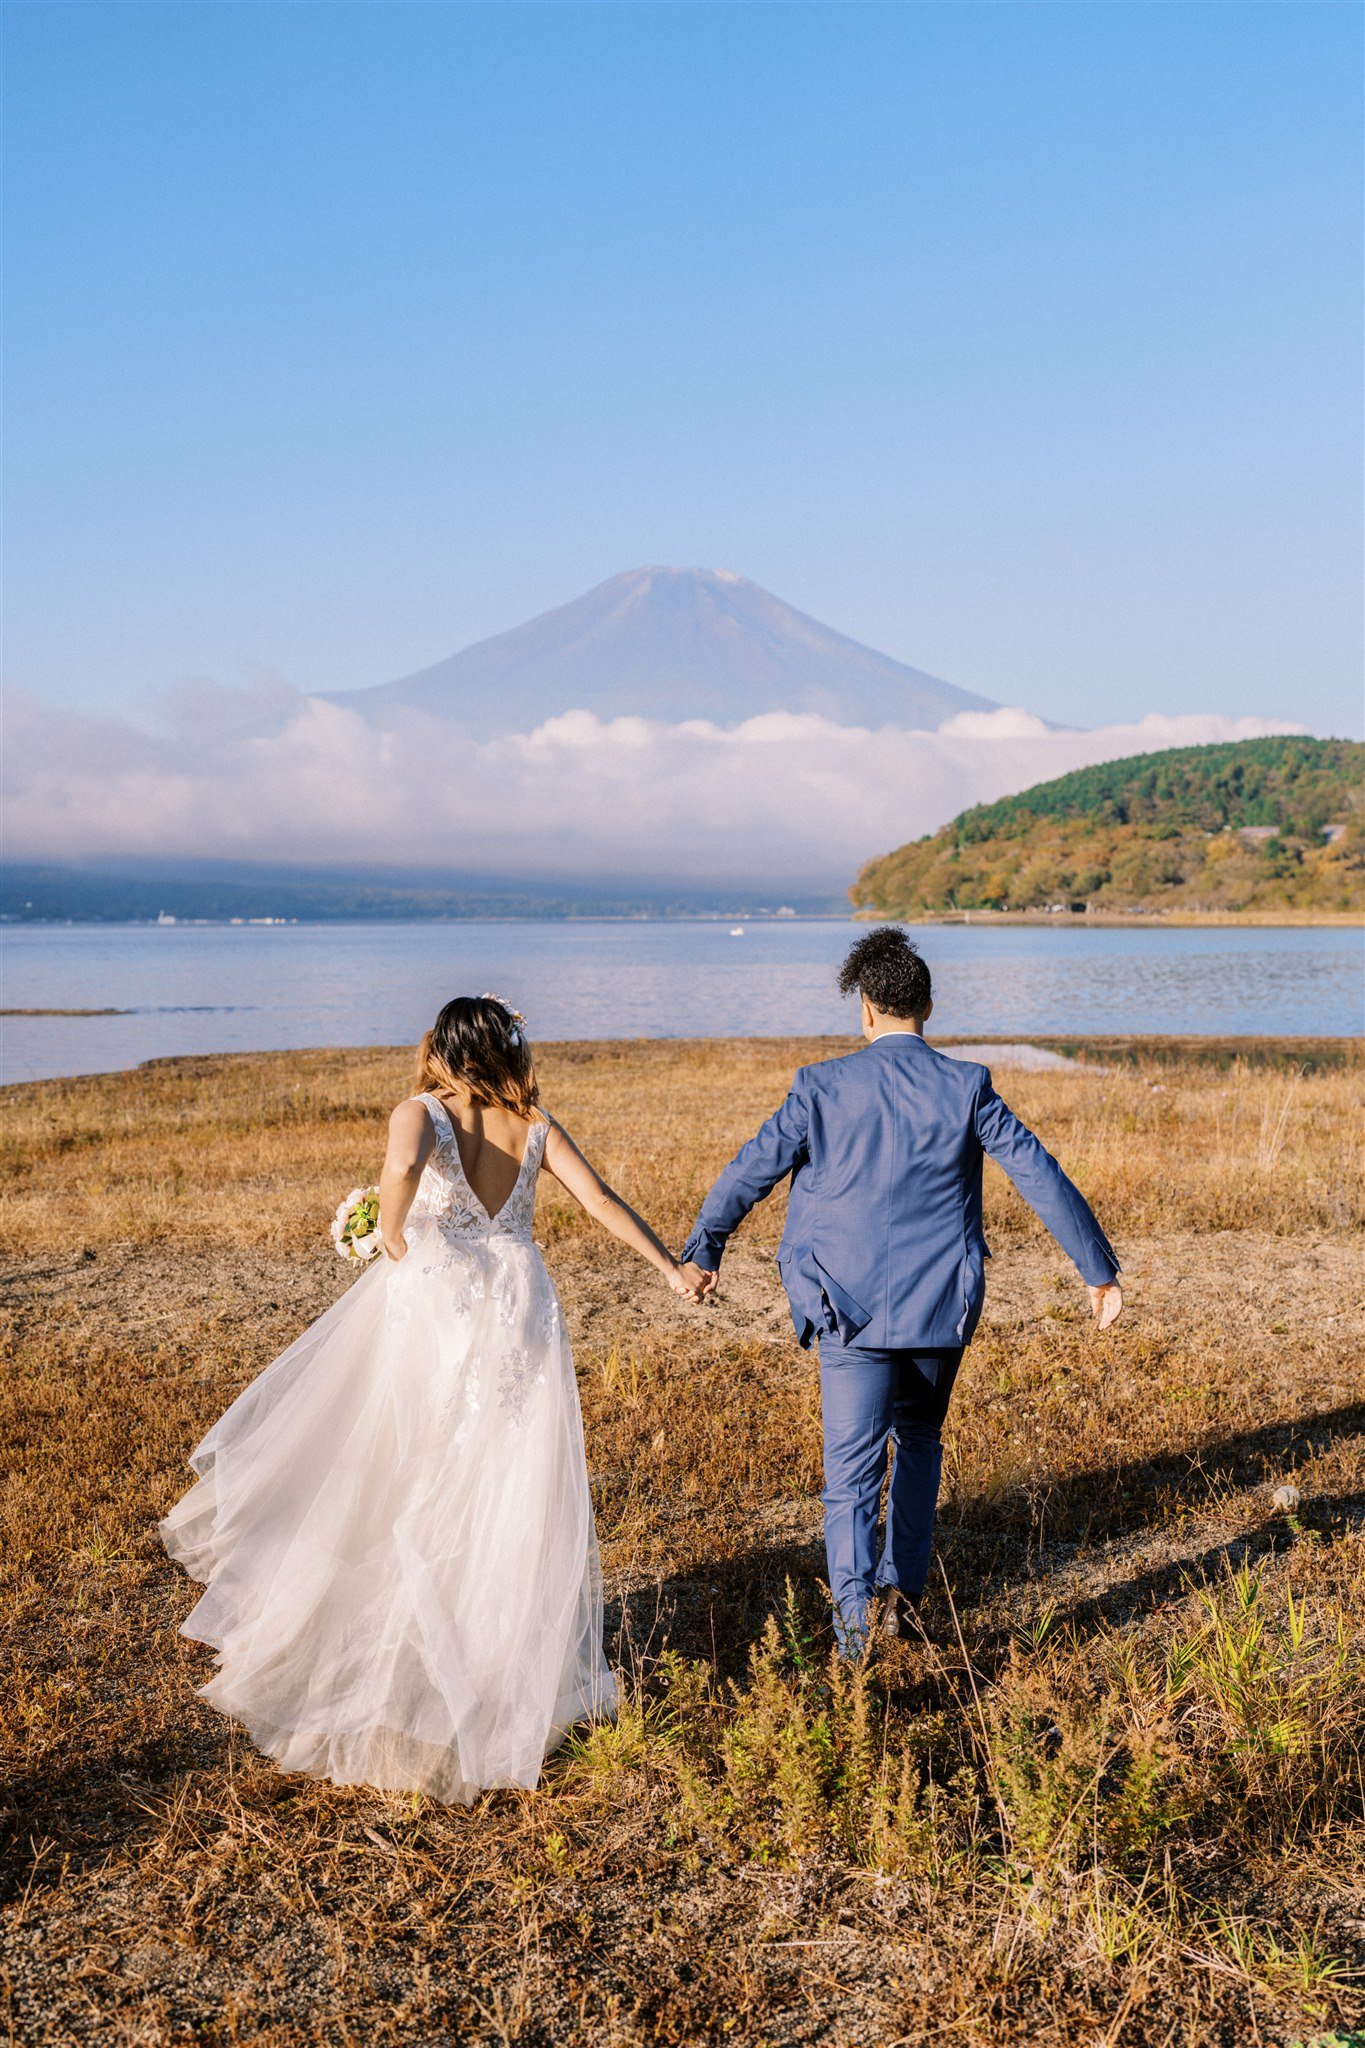 Couples photoshoot at Mount Fuji, Japan